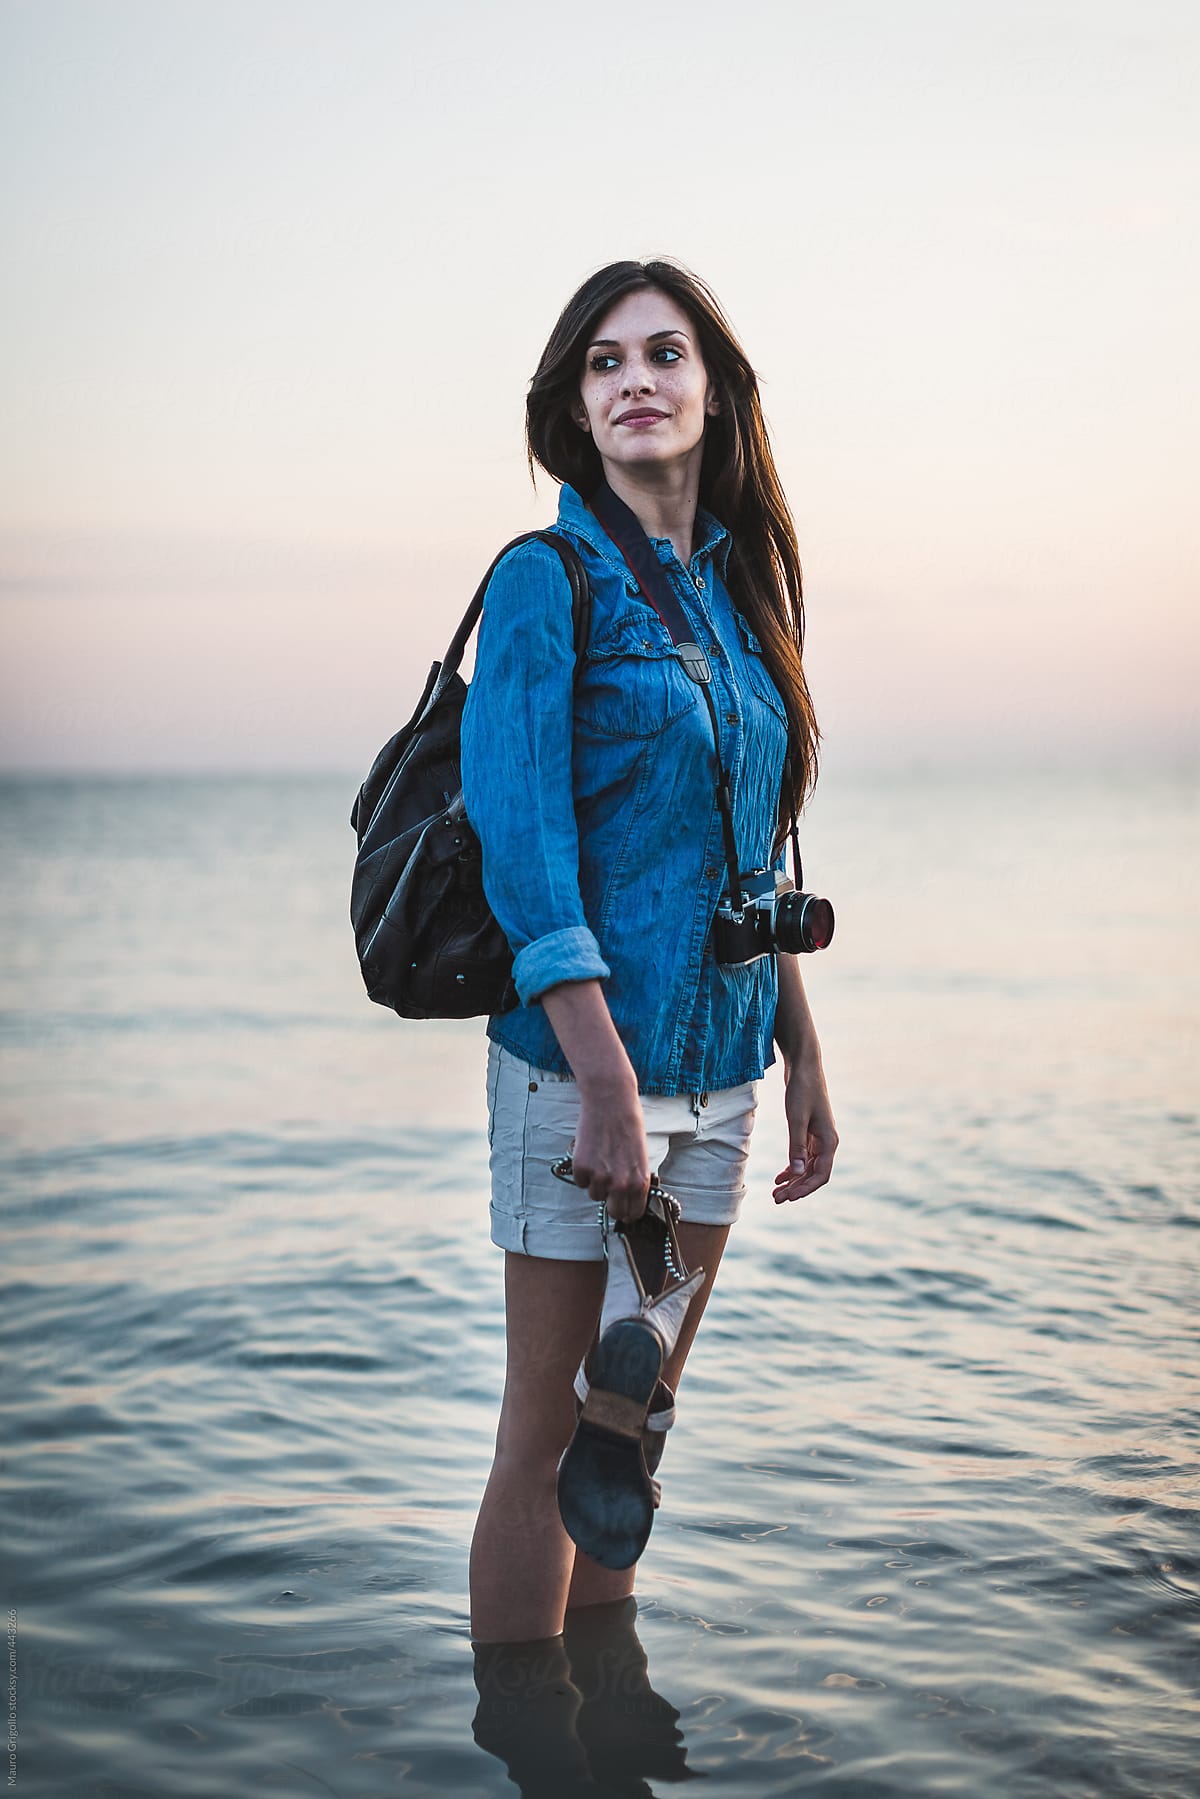 Female photographer walking on the beach